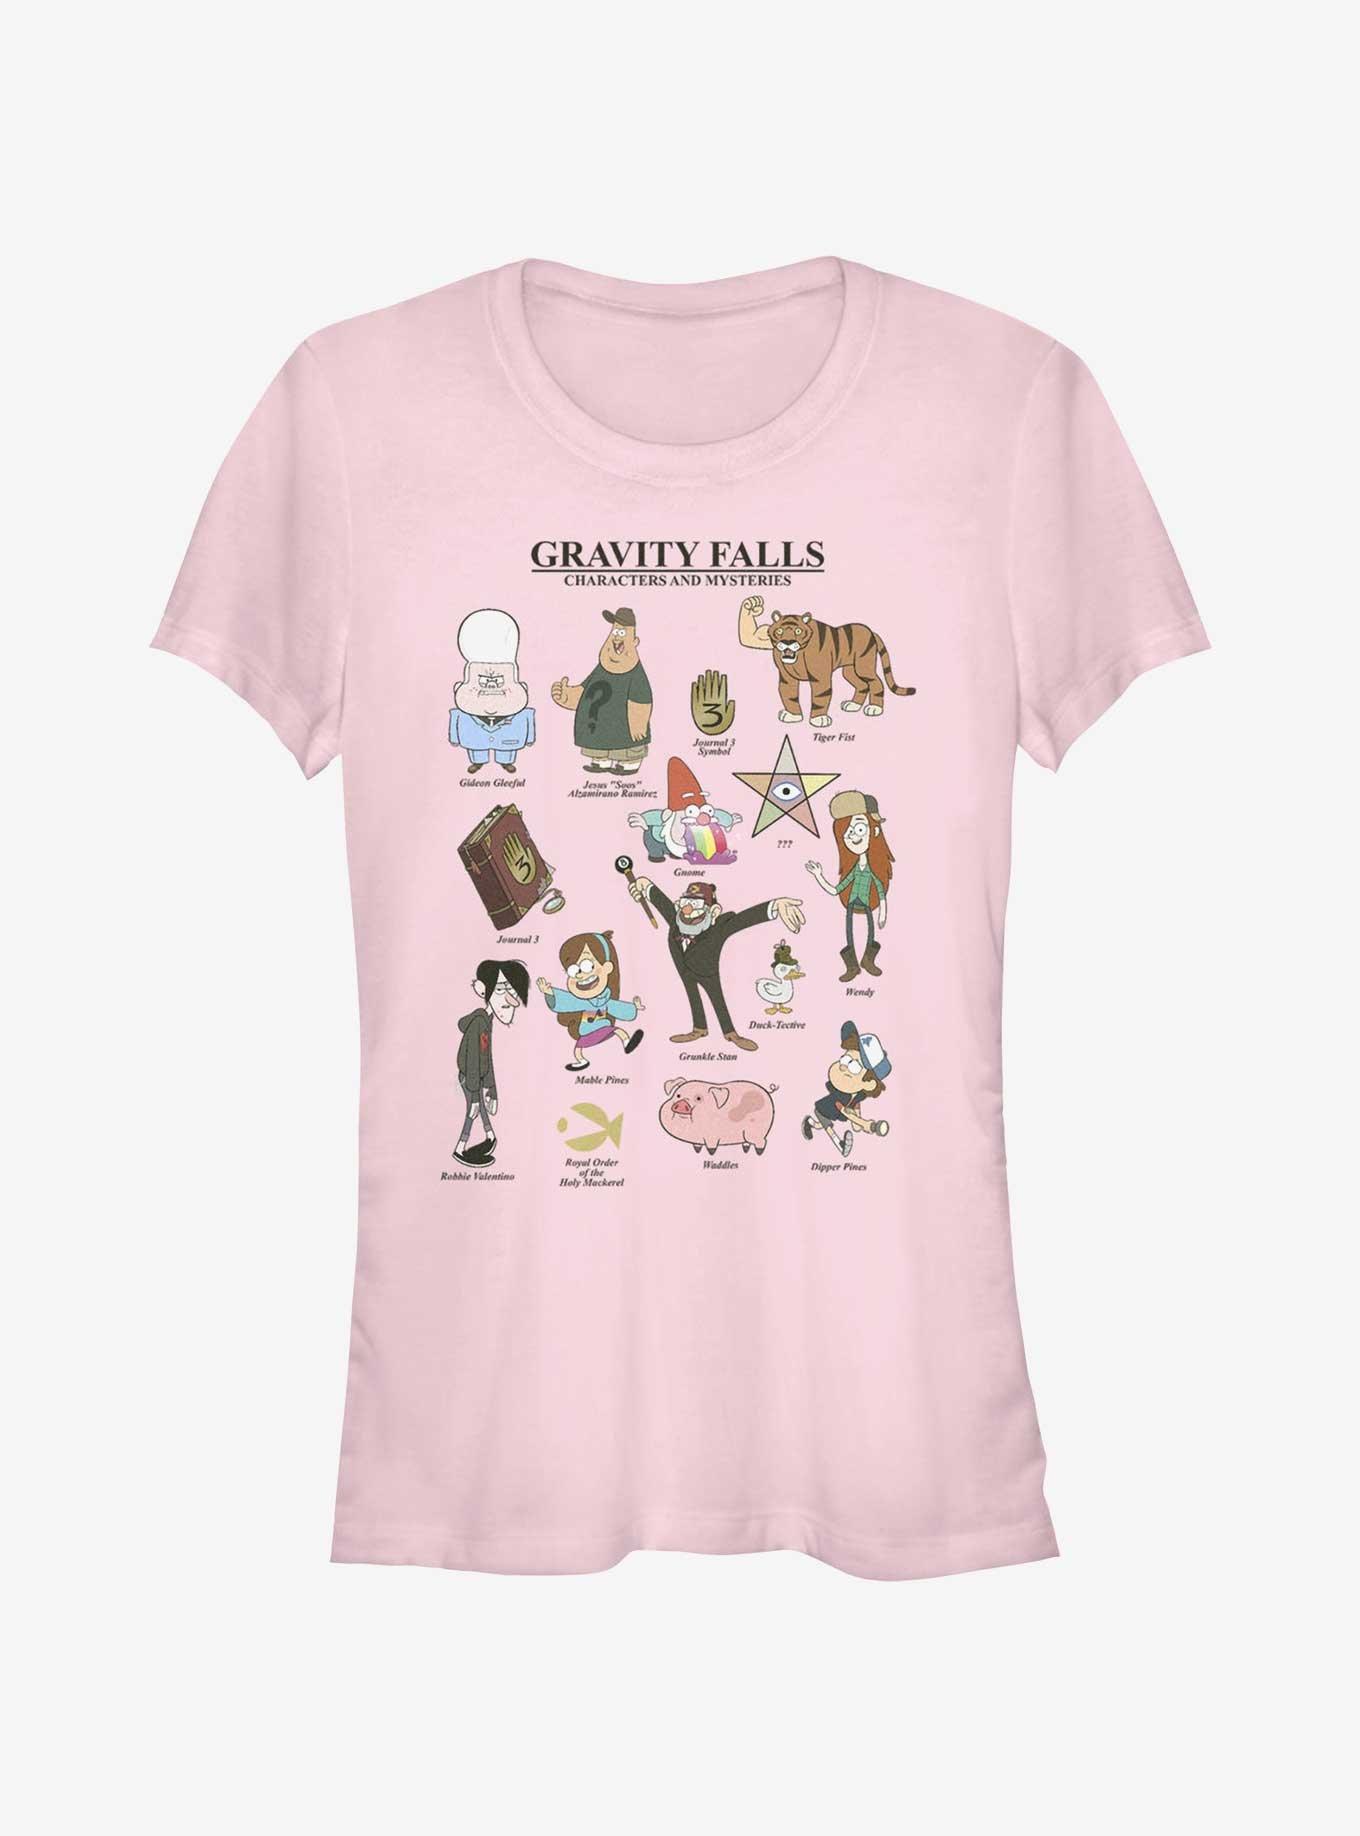 Disney Gravity Falls Characters & Mysteries Girls T-Shirt, LIGHT PINK, hi-res